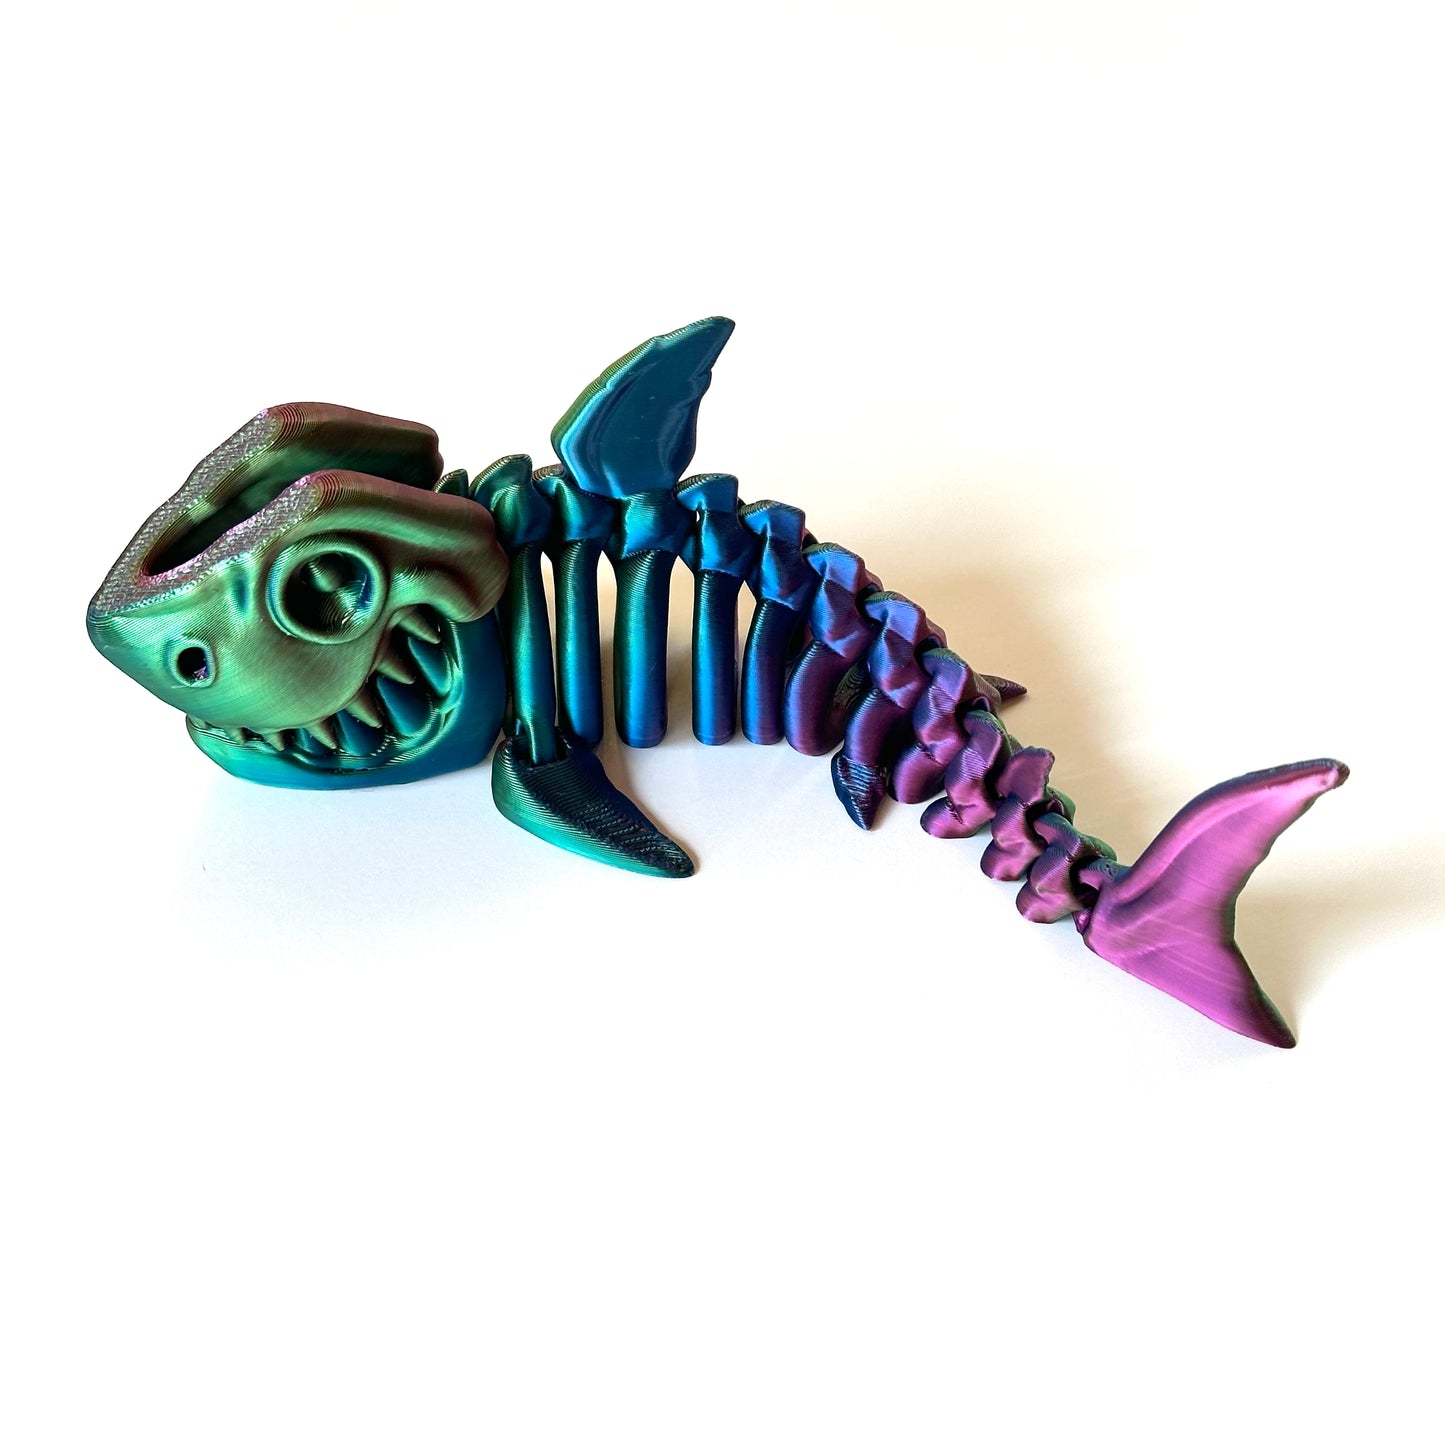 Flexi Shark - 3D Printed Articulating